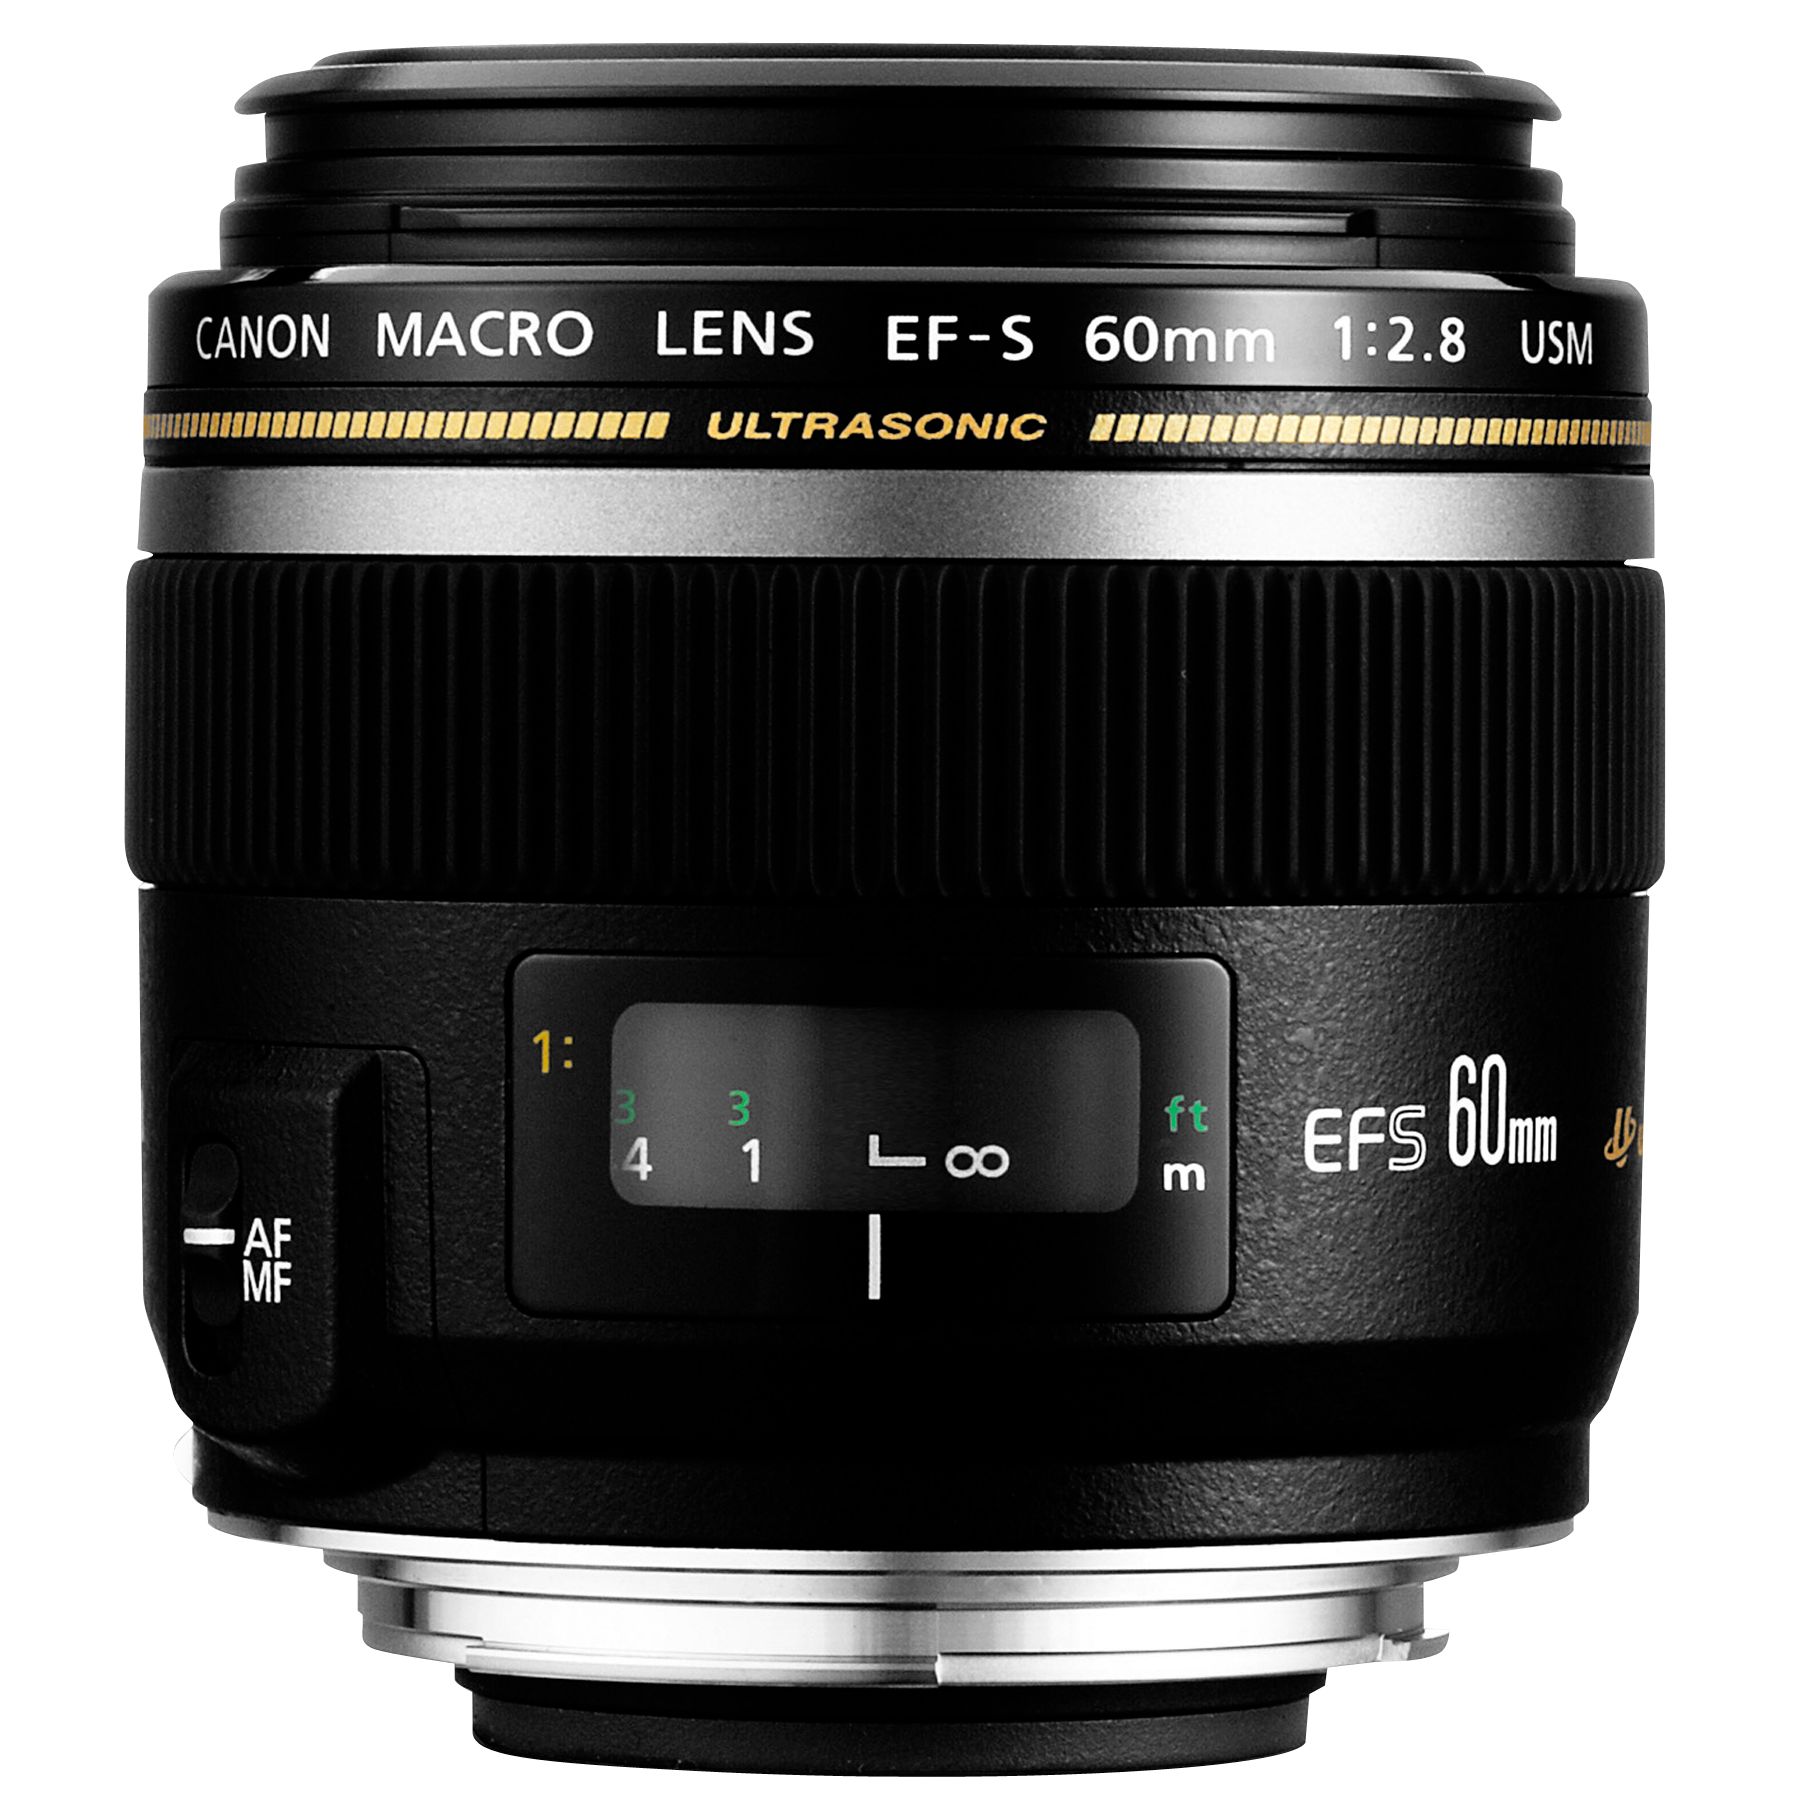 Canon EF-S 60mm f/2.8 Macro USM Lens at John Lewis